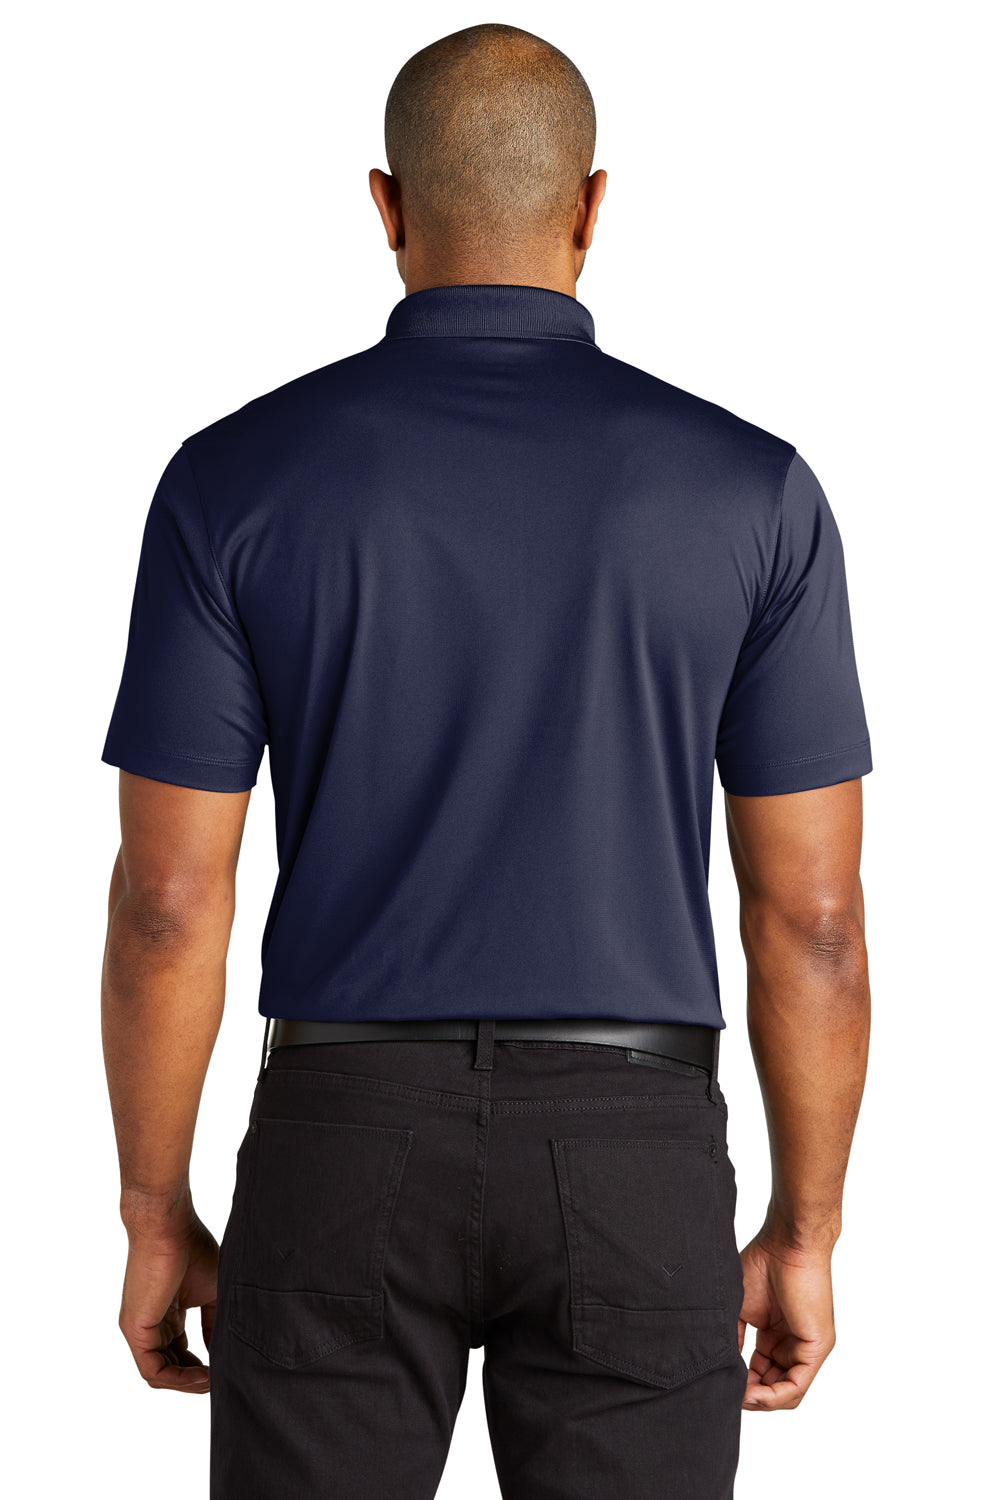 Port Authority K863 C-Free Performance Short Sleeve Polo Shirt True Navy Blue Back